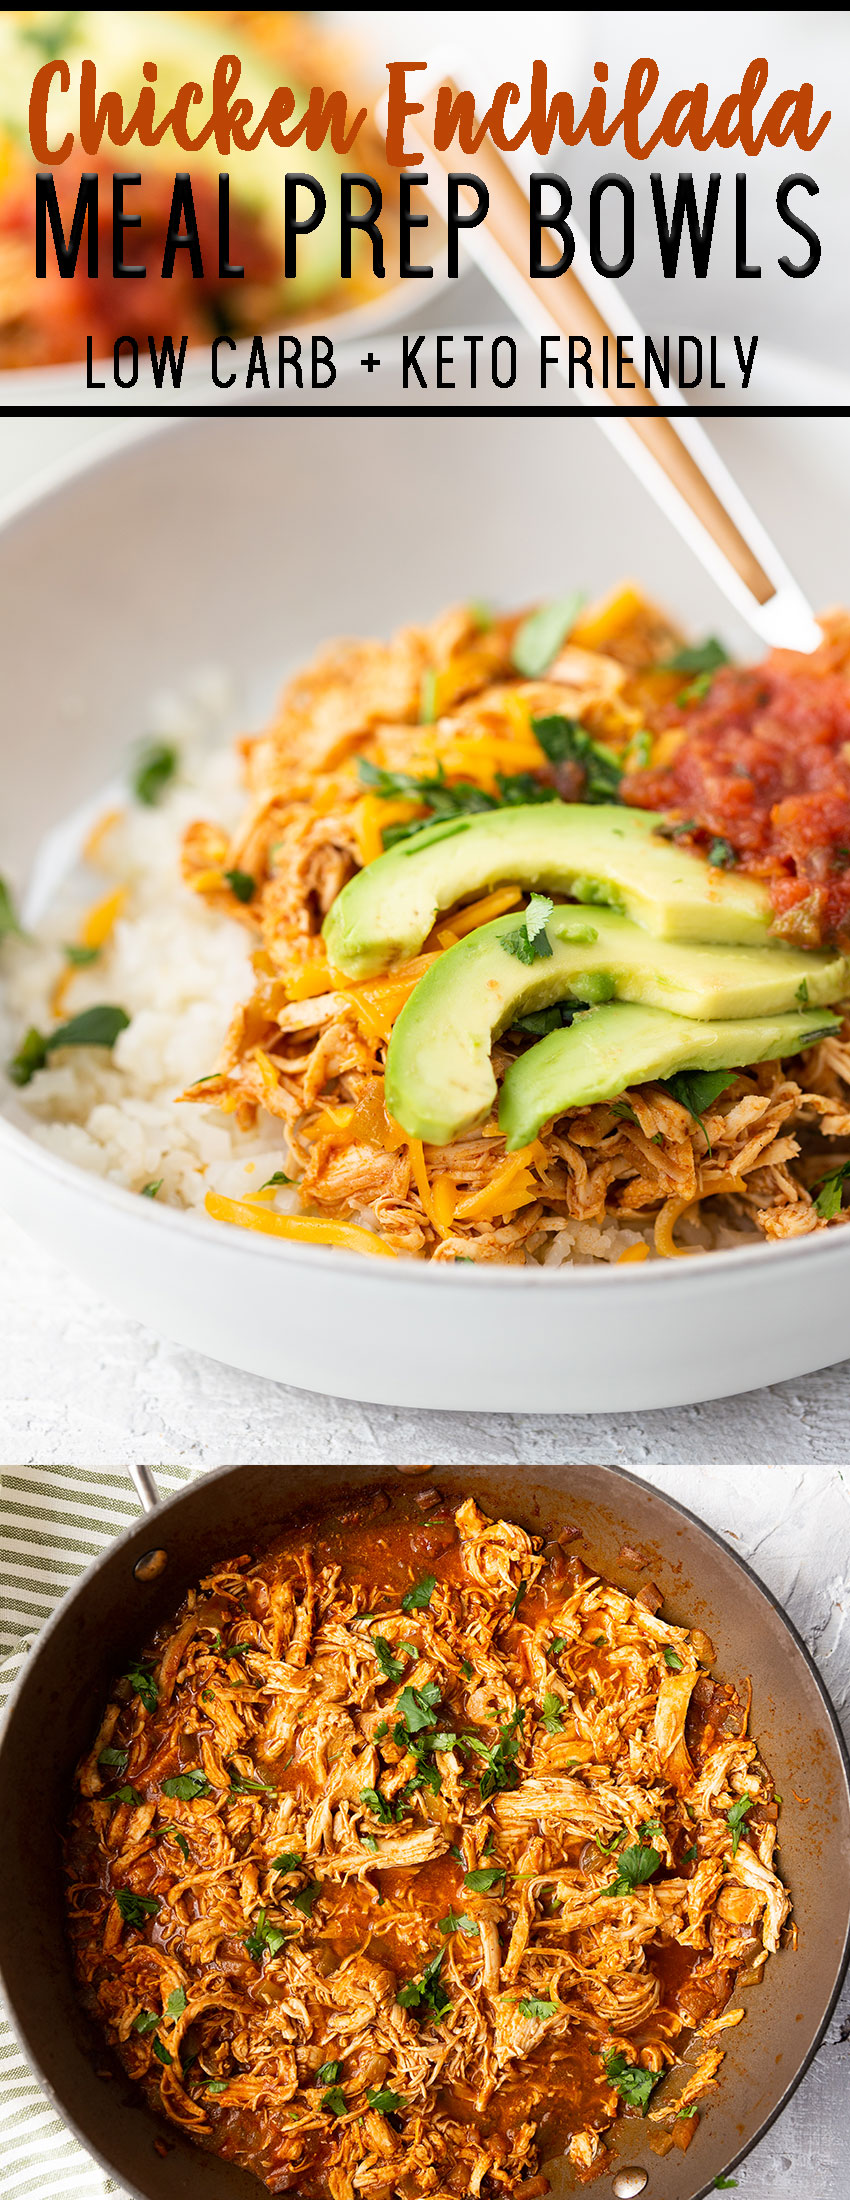 Chicken enchilada bowls--A keto friendly, low carb meal option for chicken enchiladas